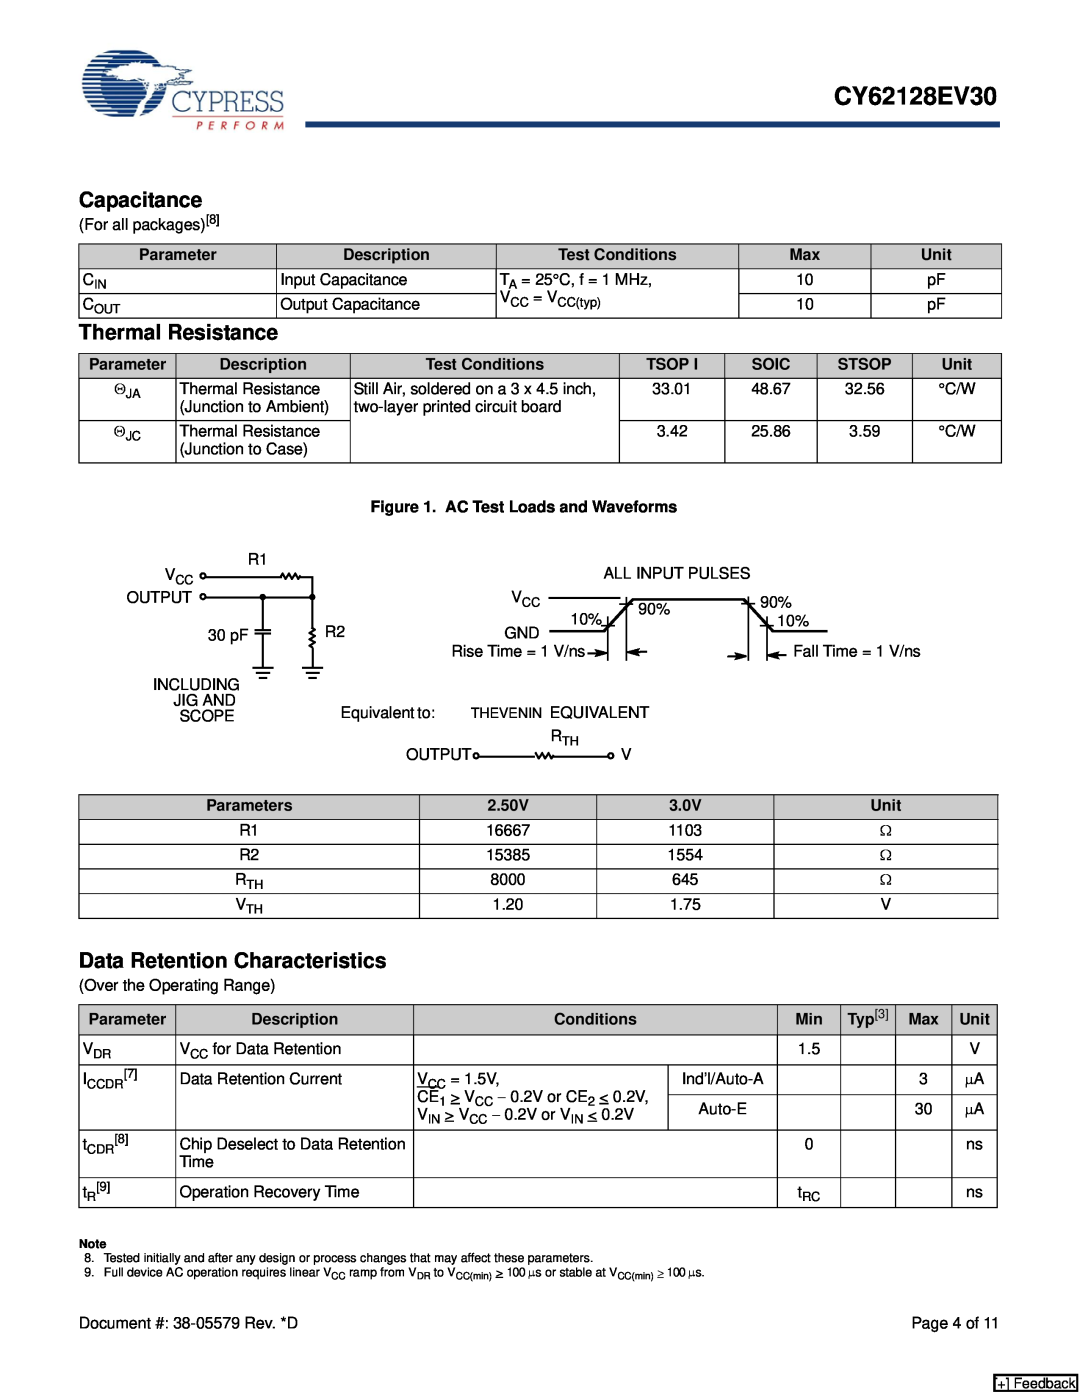 Cypress CY62128EV30 manual Capacitance, Data Retention Characteristics, Thermal Resistance 